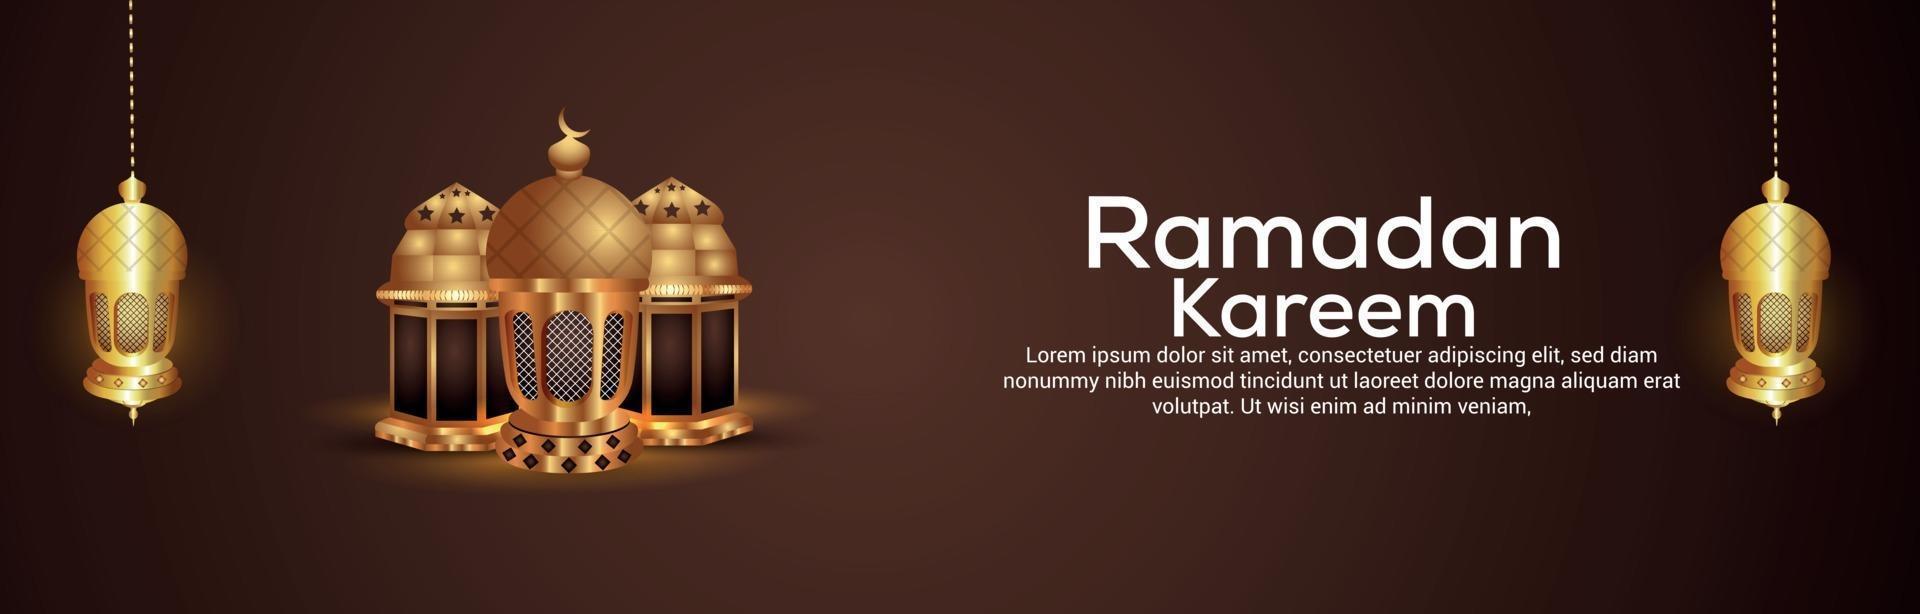 Creative vector illustration of ramadan kareem celebration banner with golden lantern